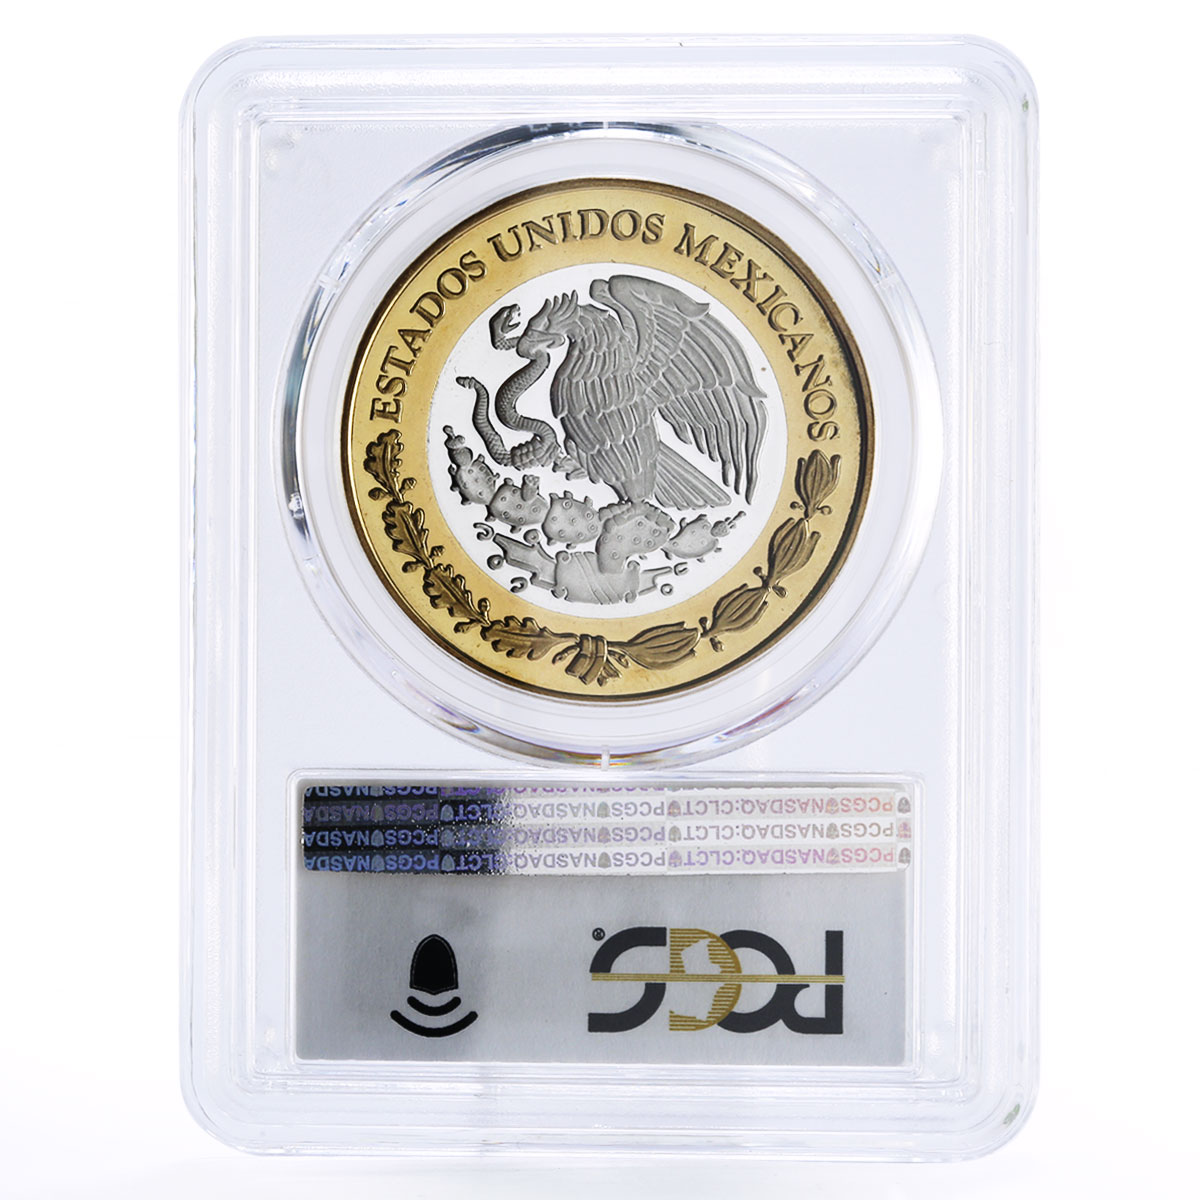 Mexico 100 pesos Numismatic Heritage SUD 8 Reales PL70 PCGS bimetal coin 2011